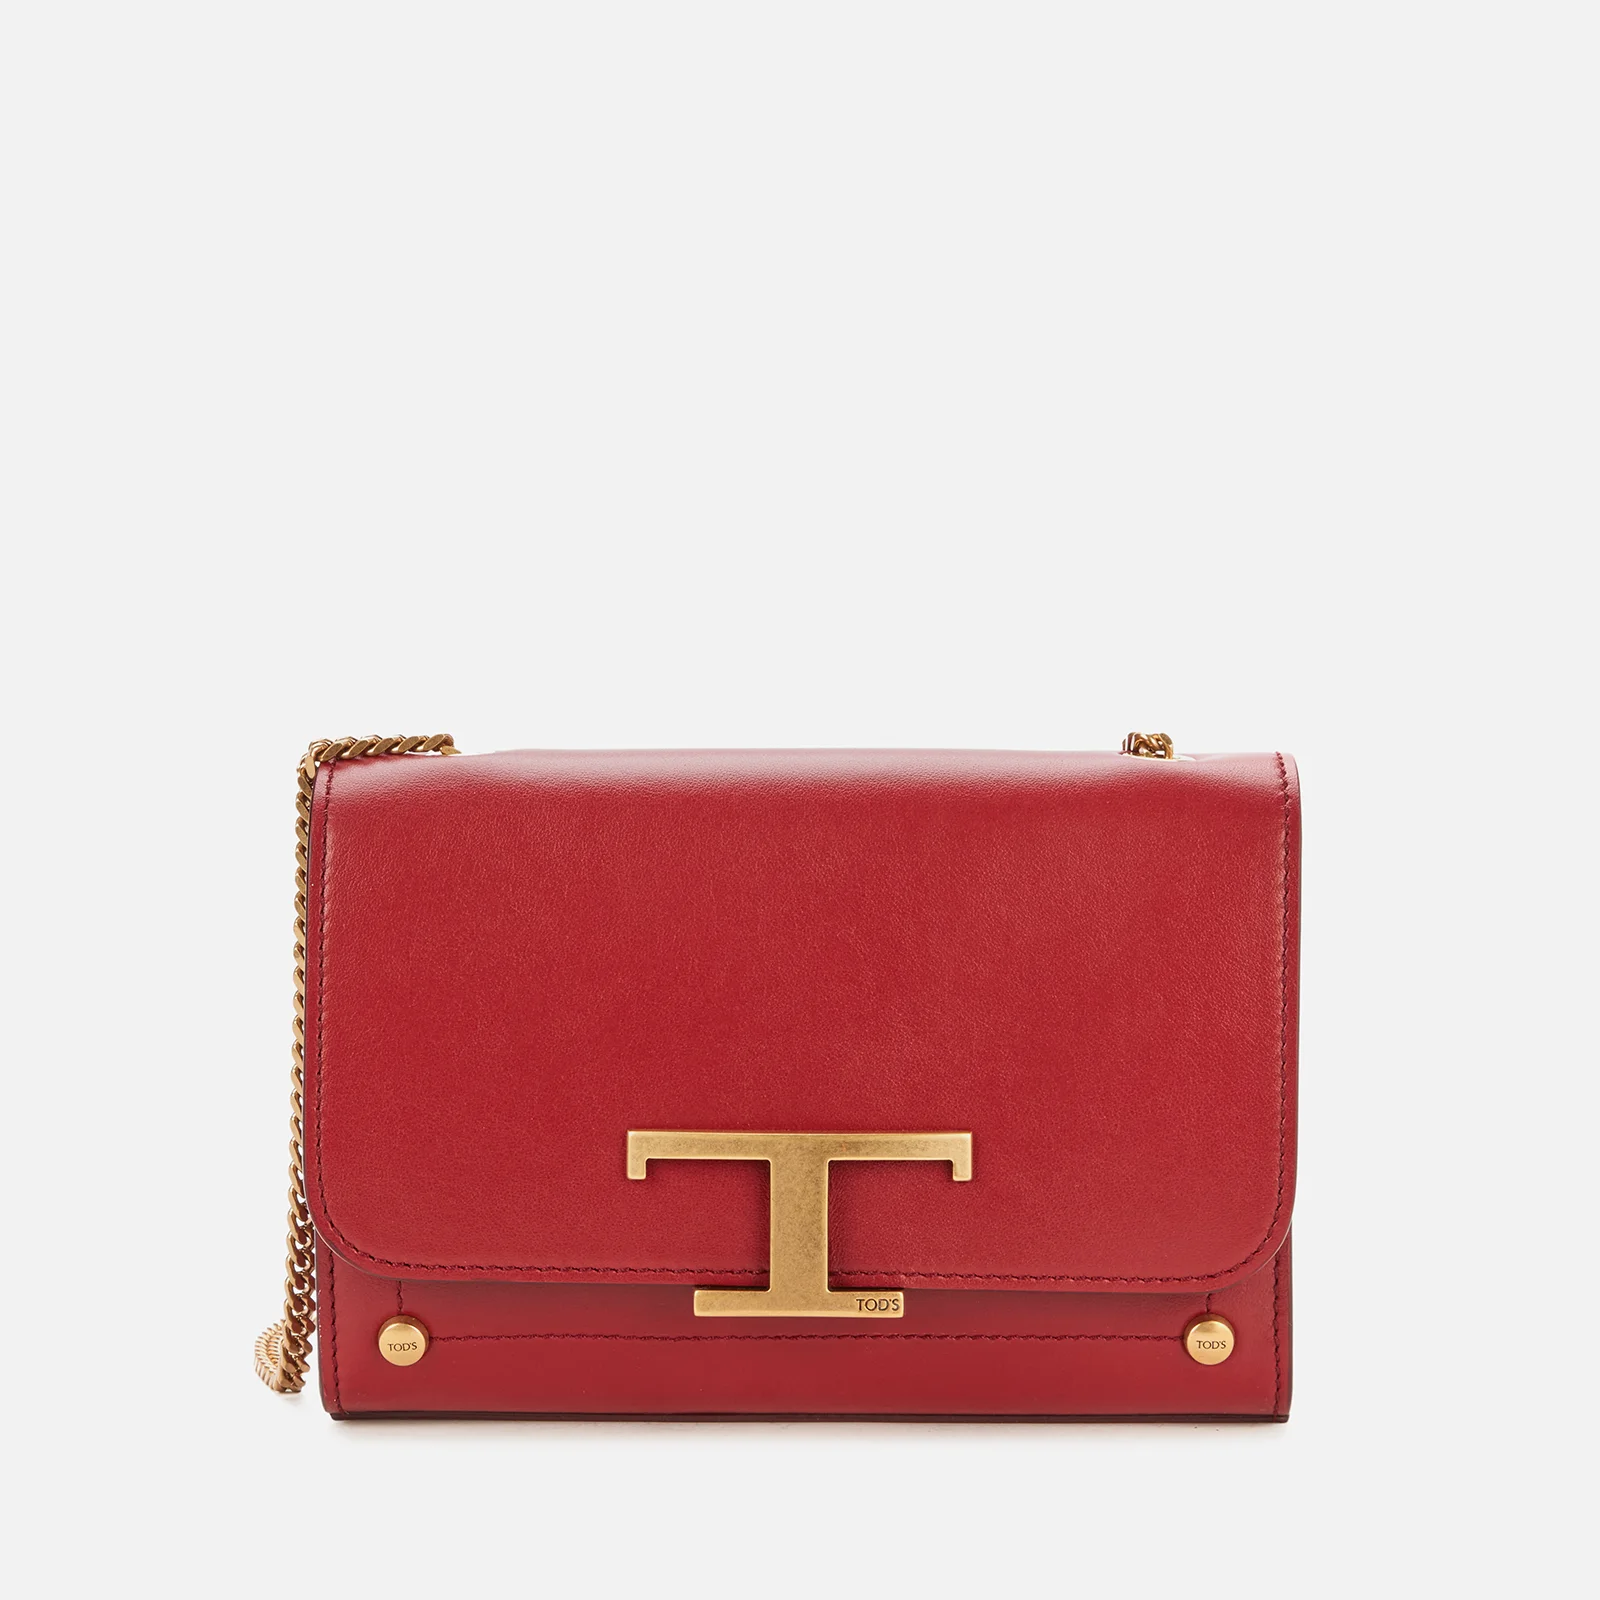 Tod's Women's Micro Shoulder/Clutch Bag - Red Garnet Image 1